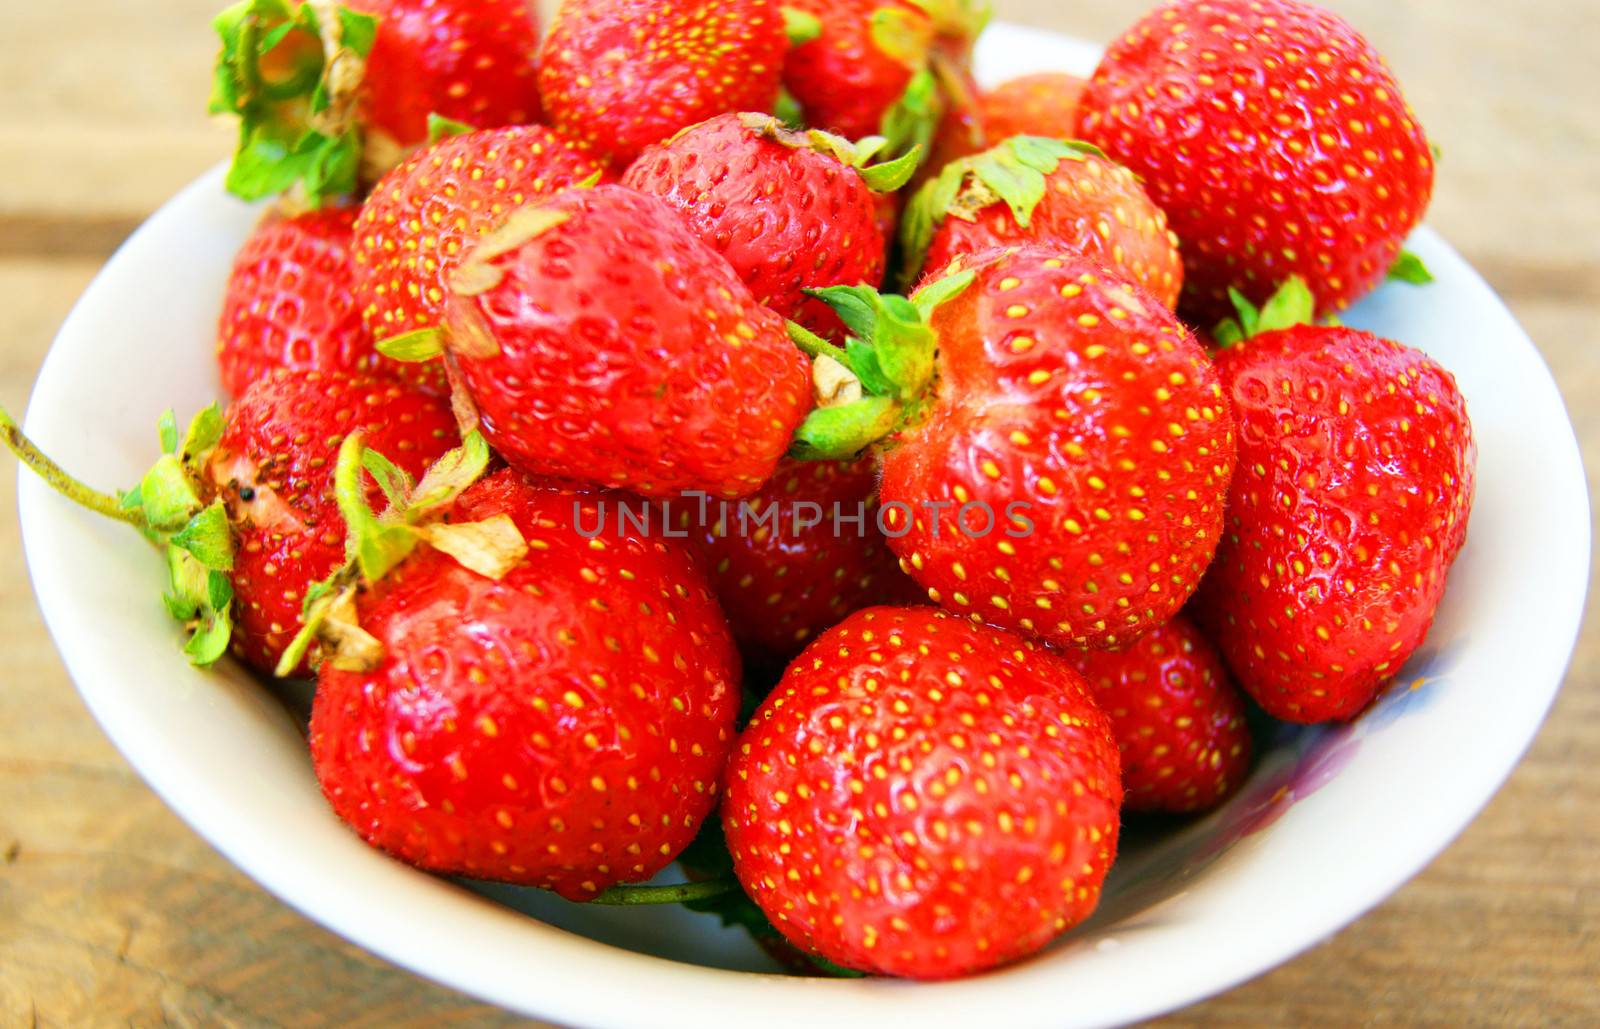 Much ripe strawberries by cobol1964